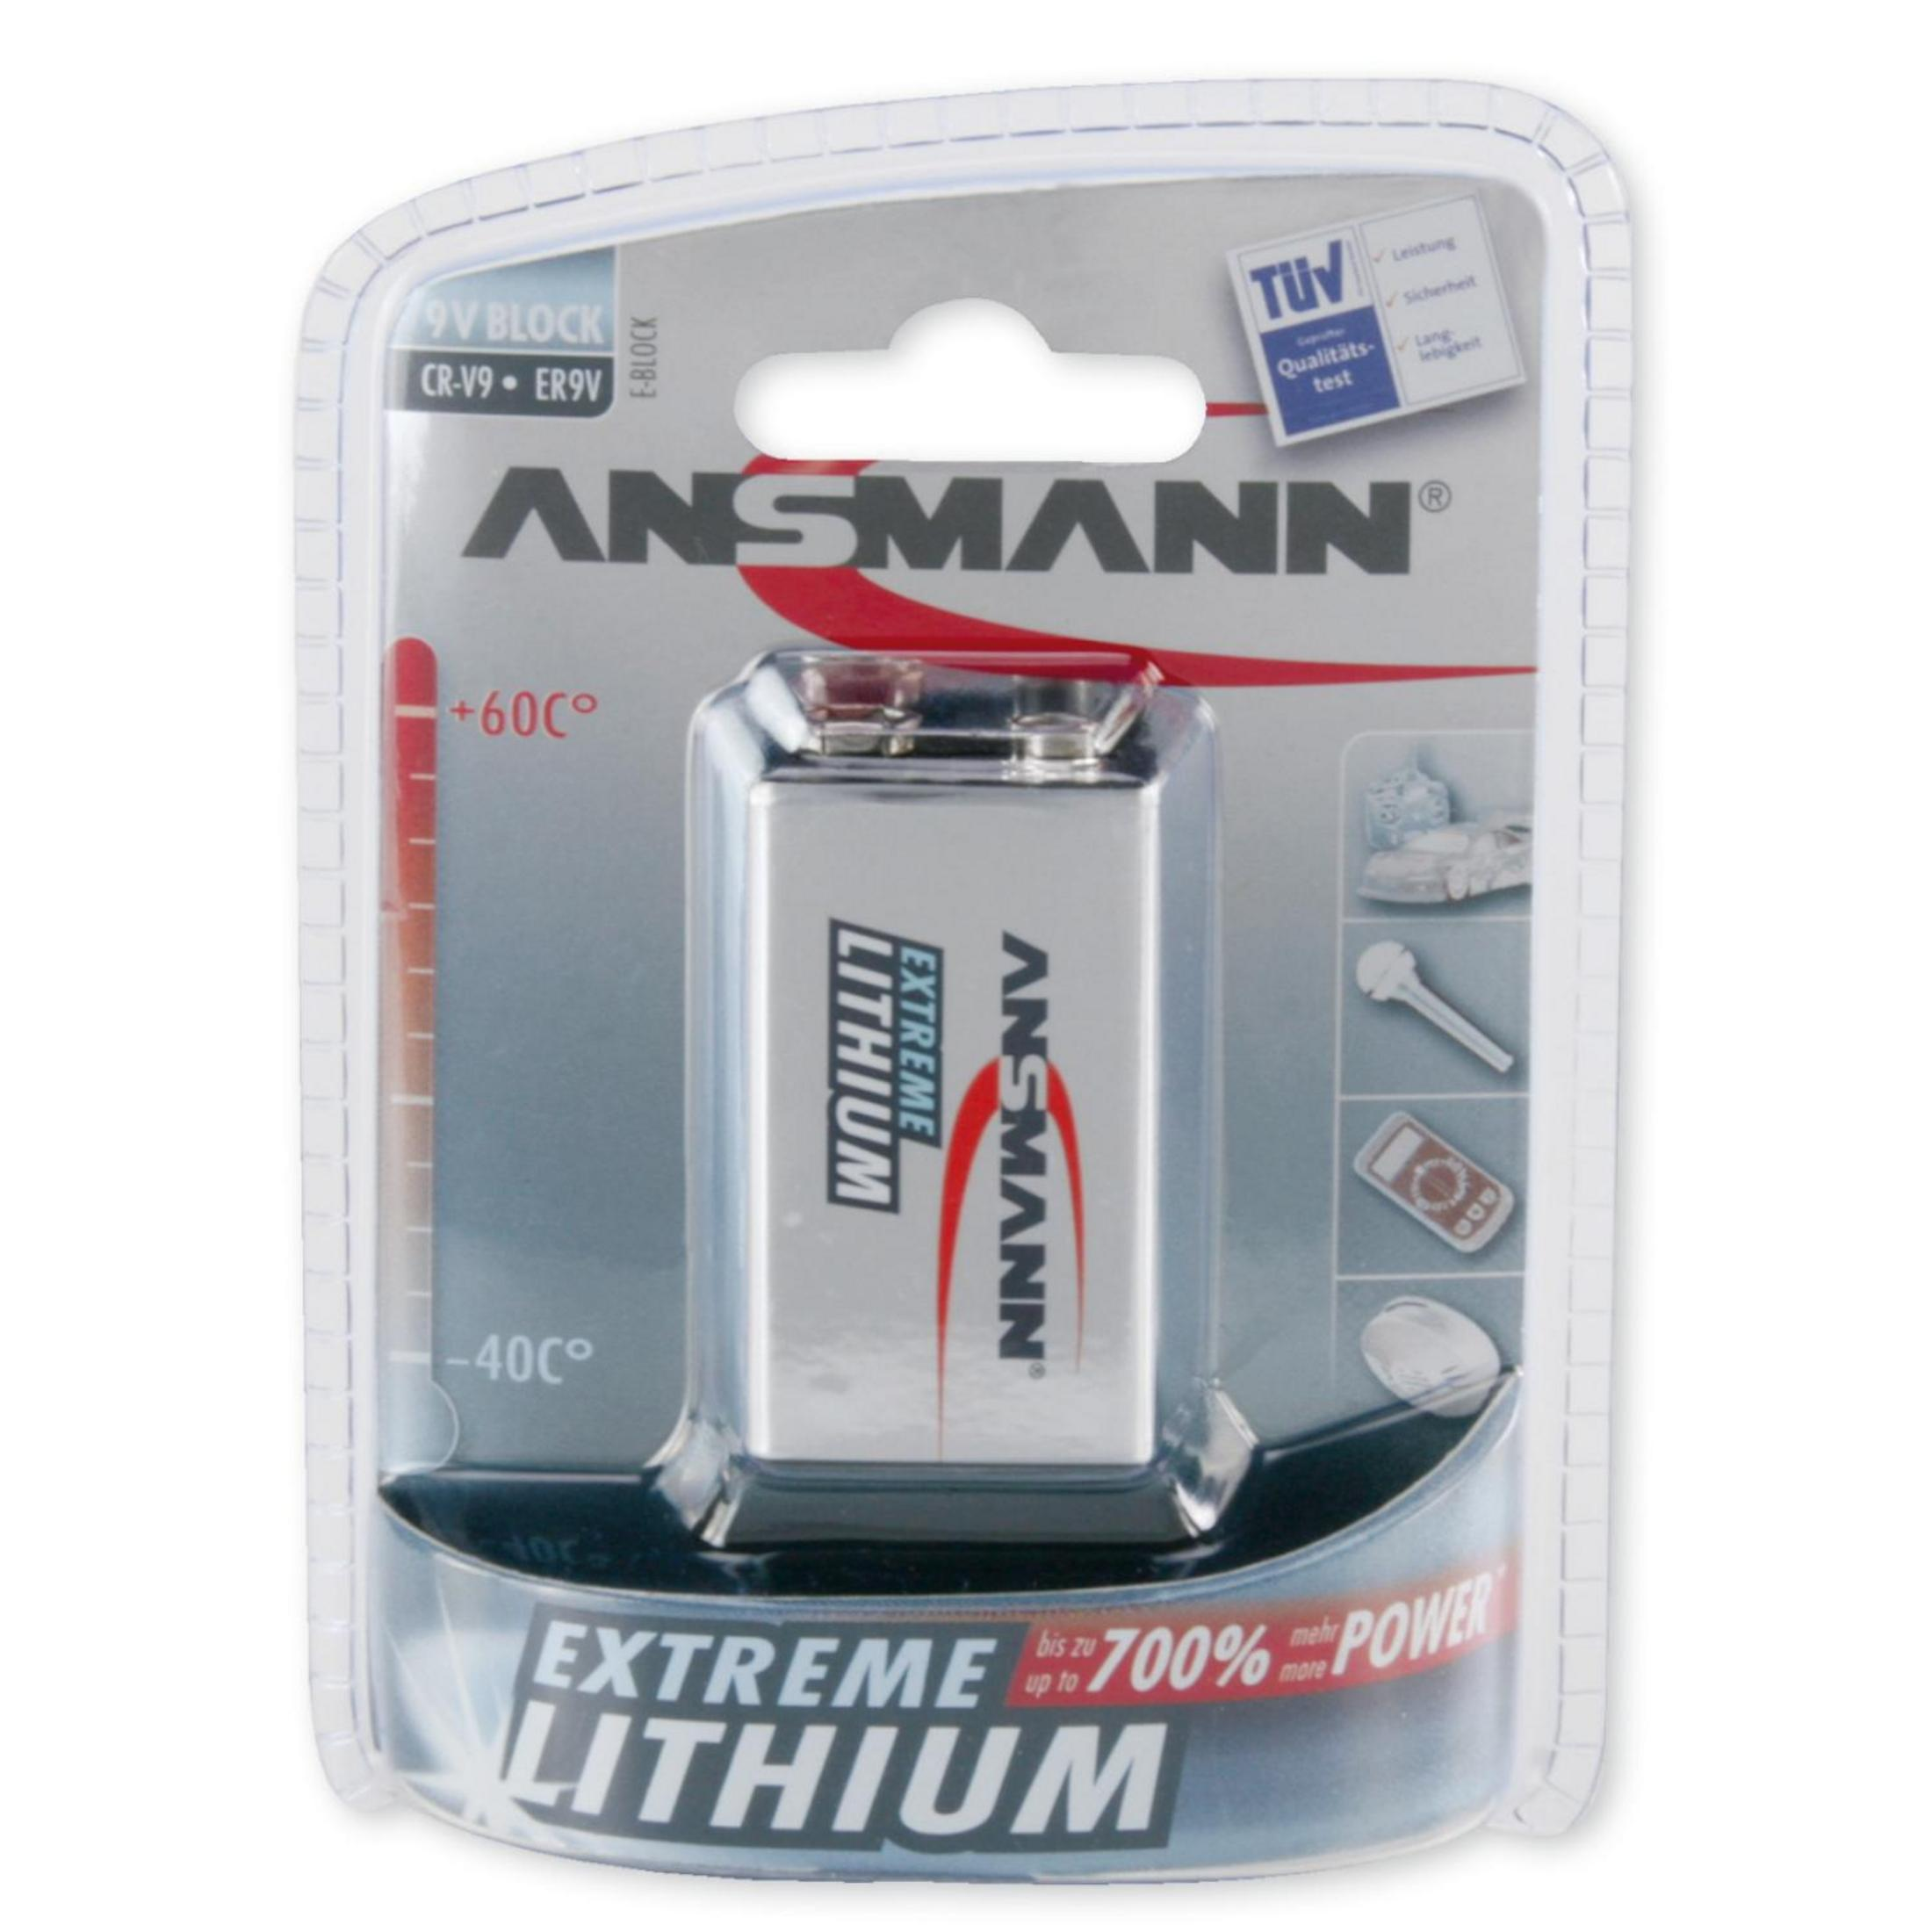 ANSMANN 5021023 9V-BLOCK LITHIUM 9 Lithium, Volt Stück Batterie, 9 Volt 1